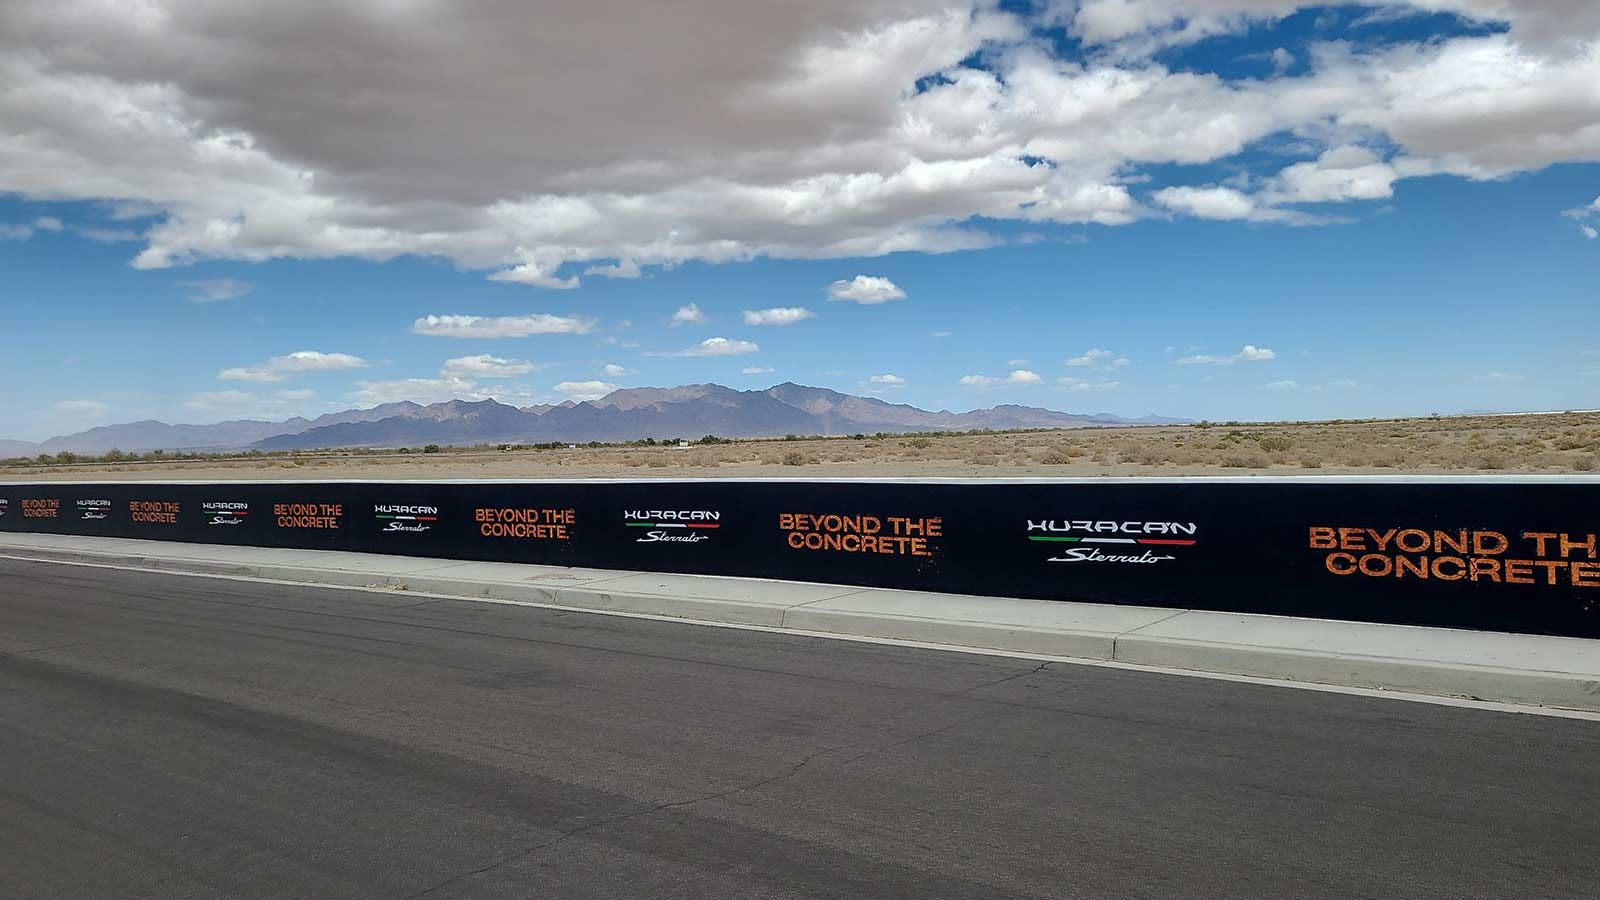 Lamborghini event signage installed outdoors